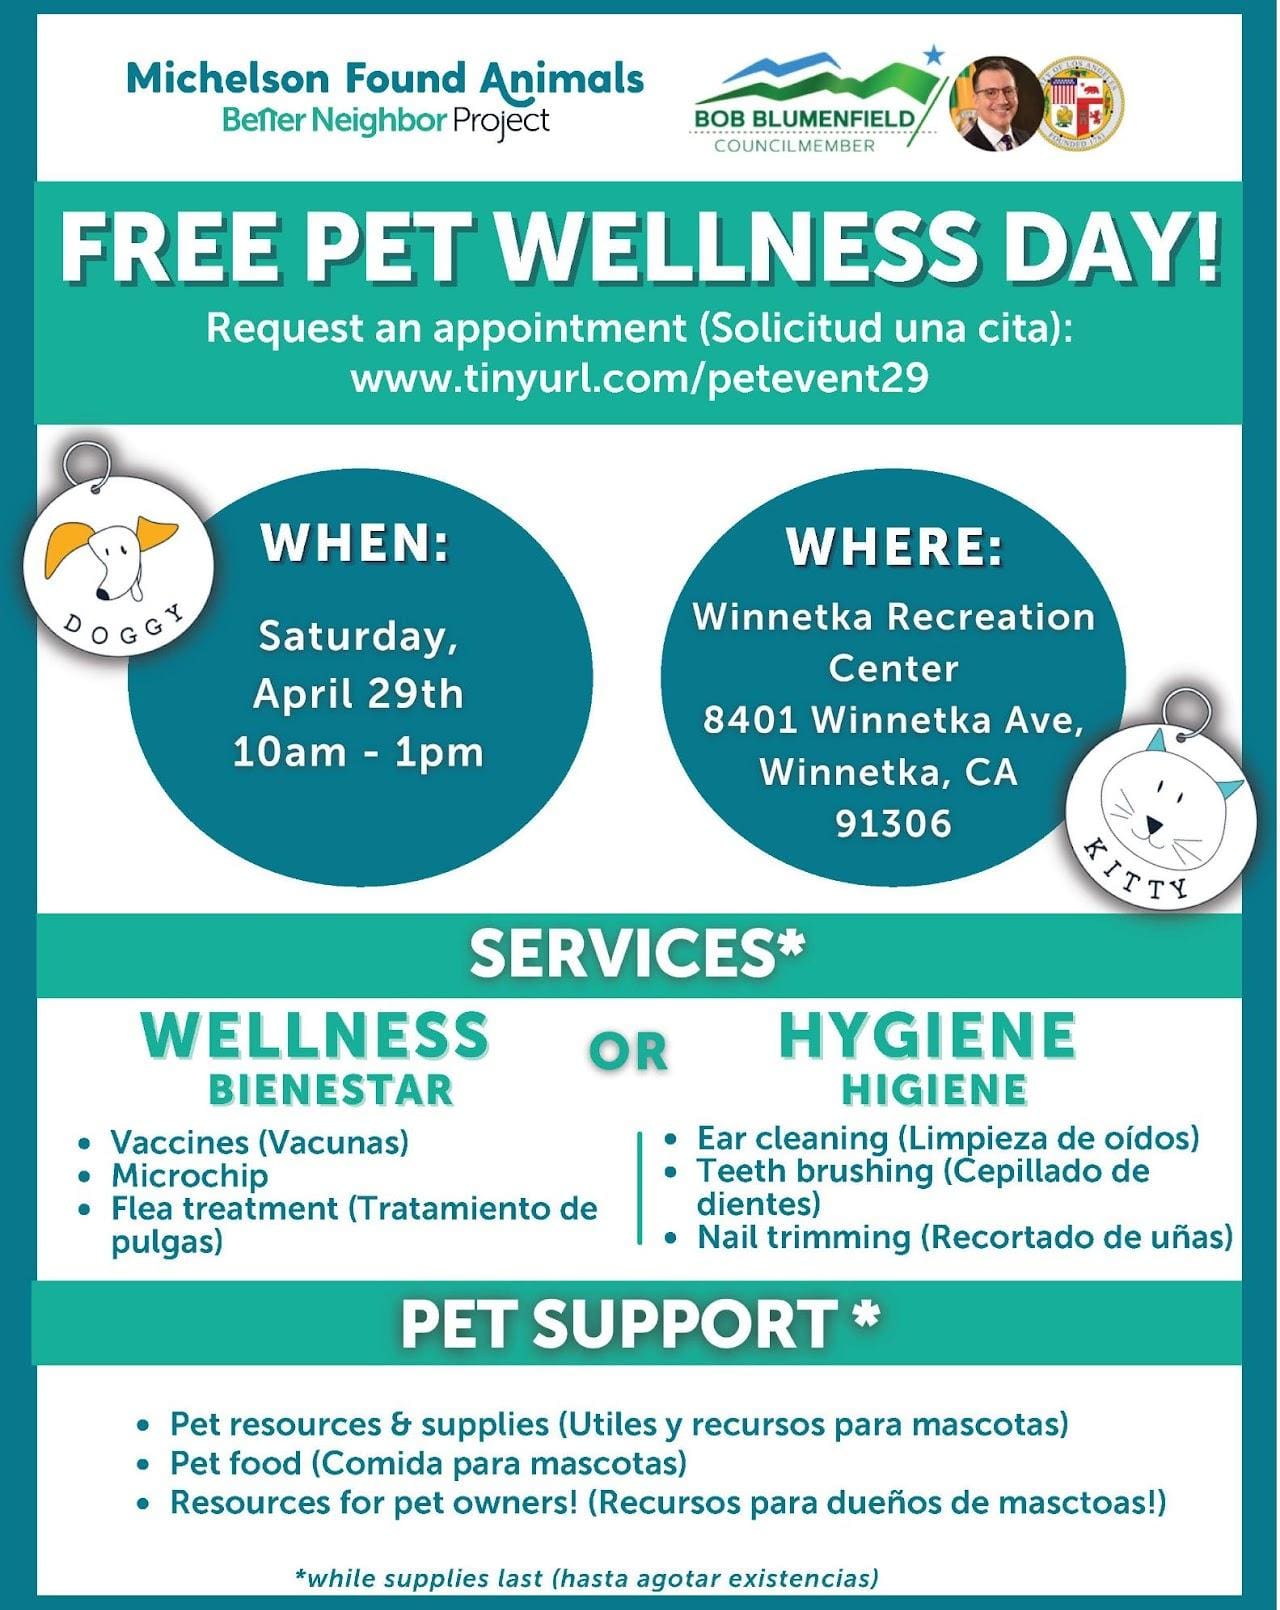 Winnetka Free Pet Wellness Day sponsored by Michelson Found Animals Better Neighbor Project